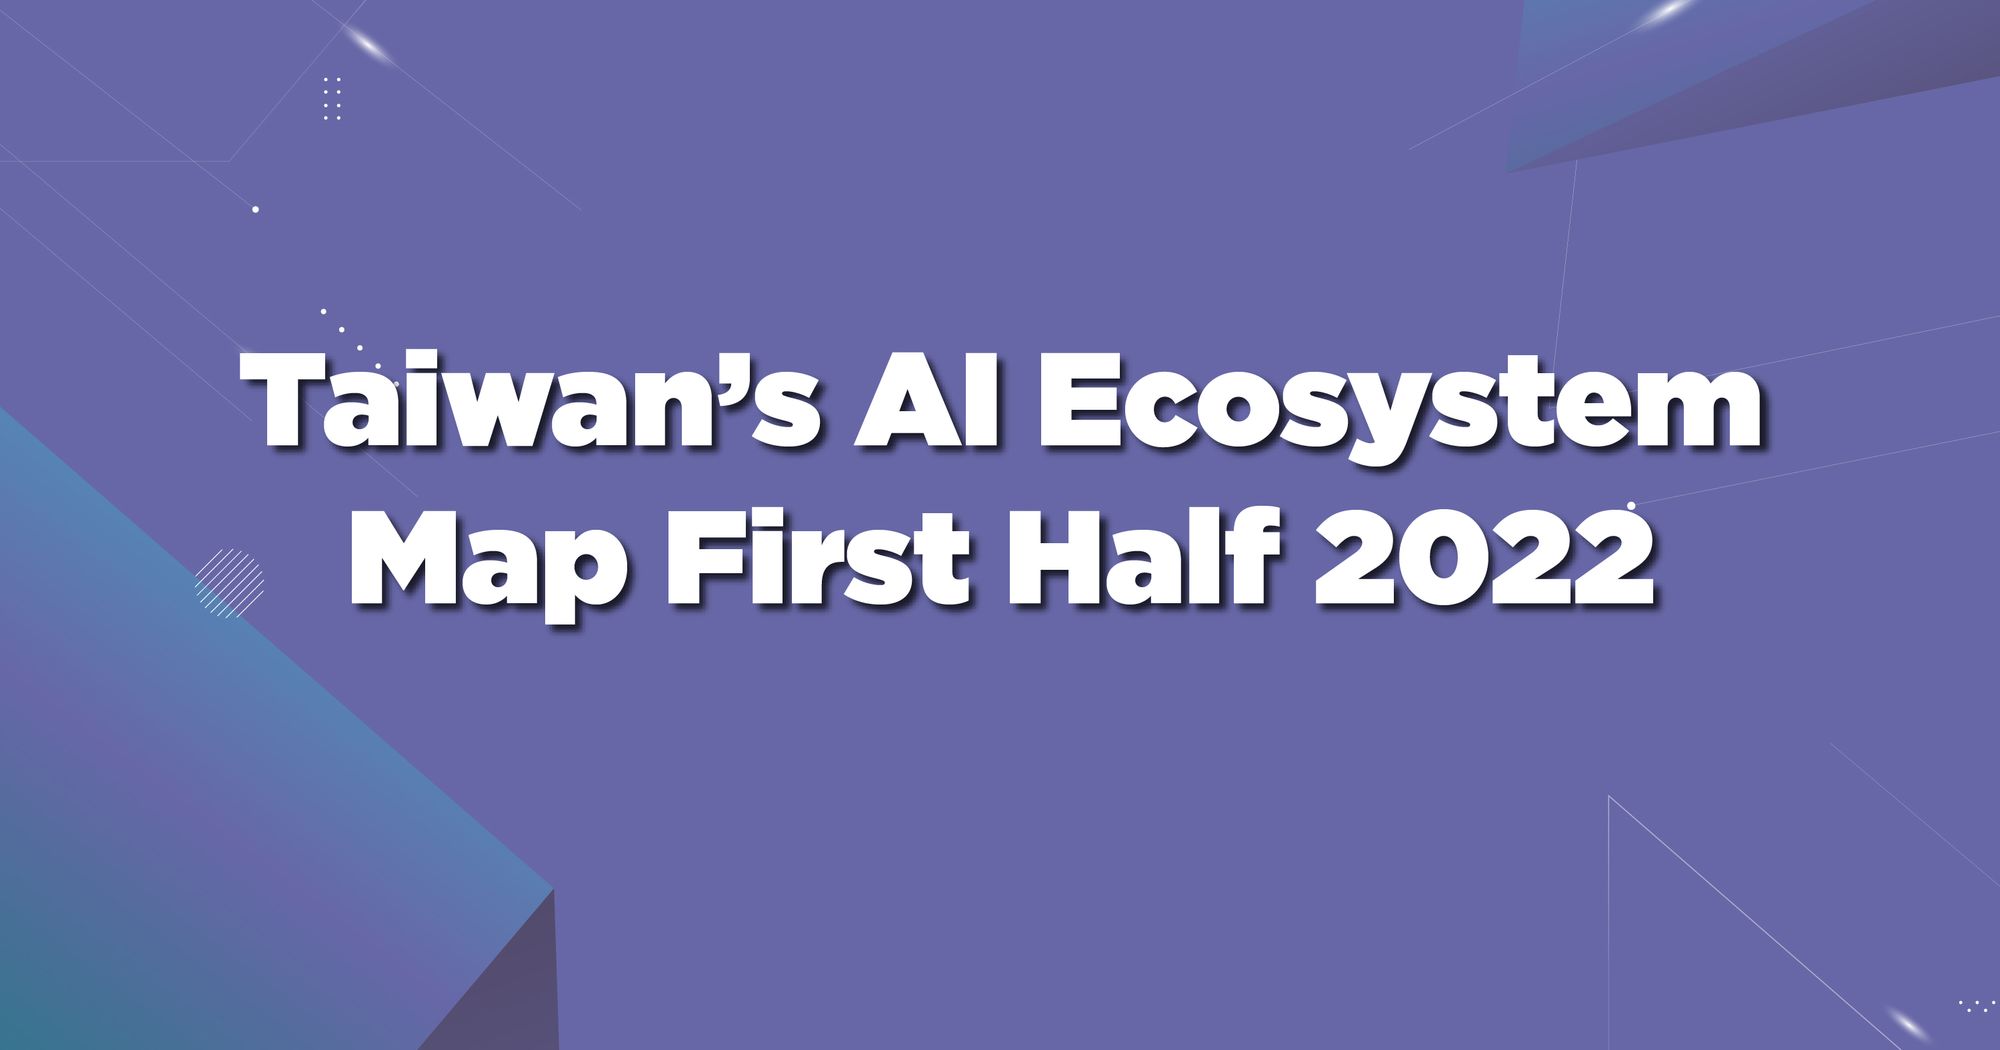 Tera Thinker 名列 2022 年上半年「台灣 AI 生態系地圖」（Taiwan’s AI Ecosystem Map First Half 2022）